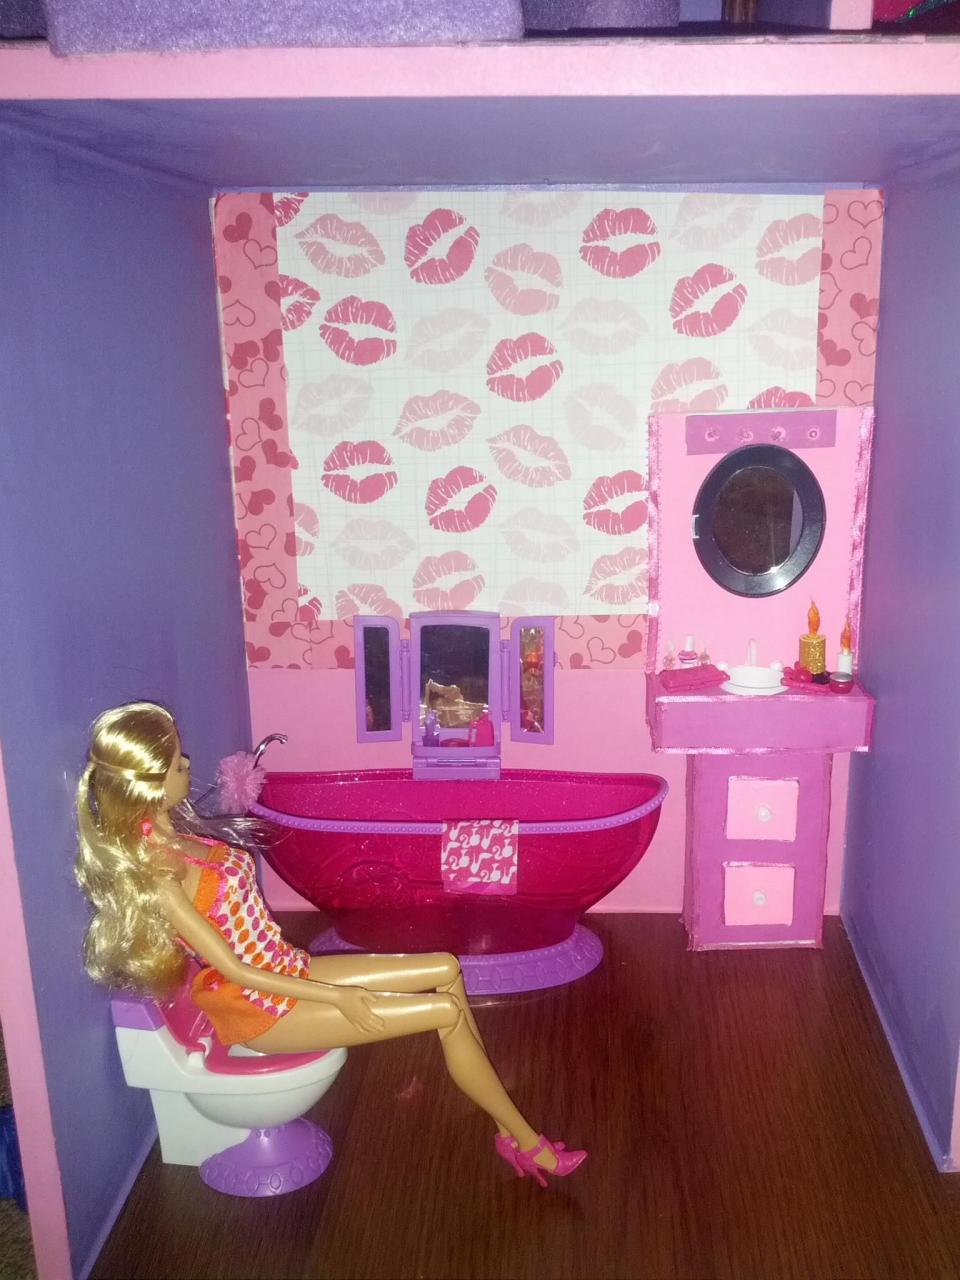 Barbie bathroom made by me!Monica's Barbie House done Dec 2012